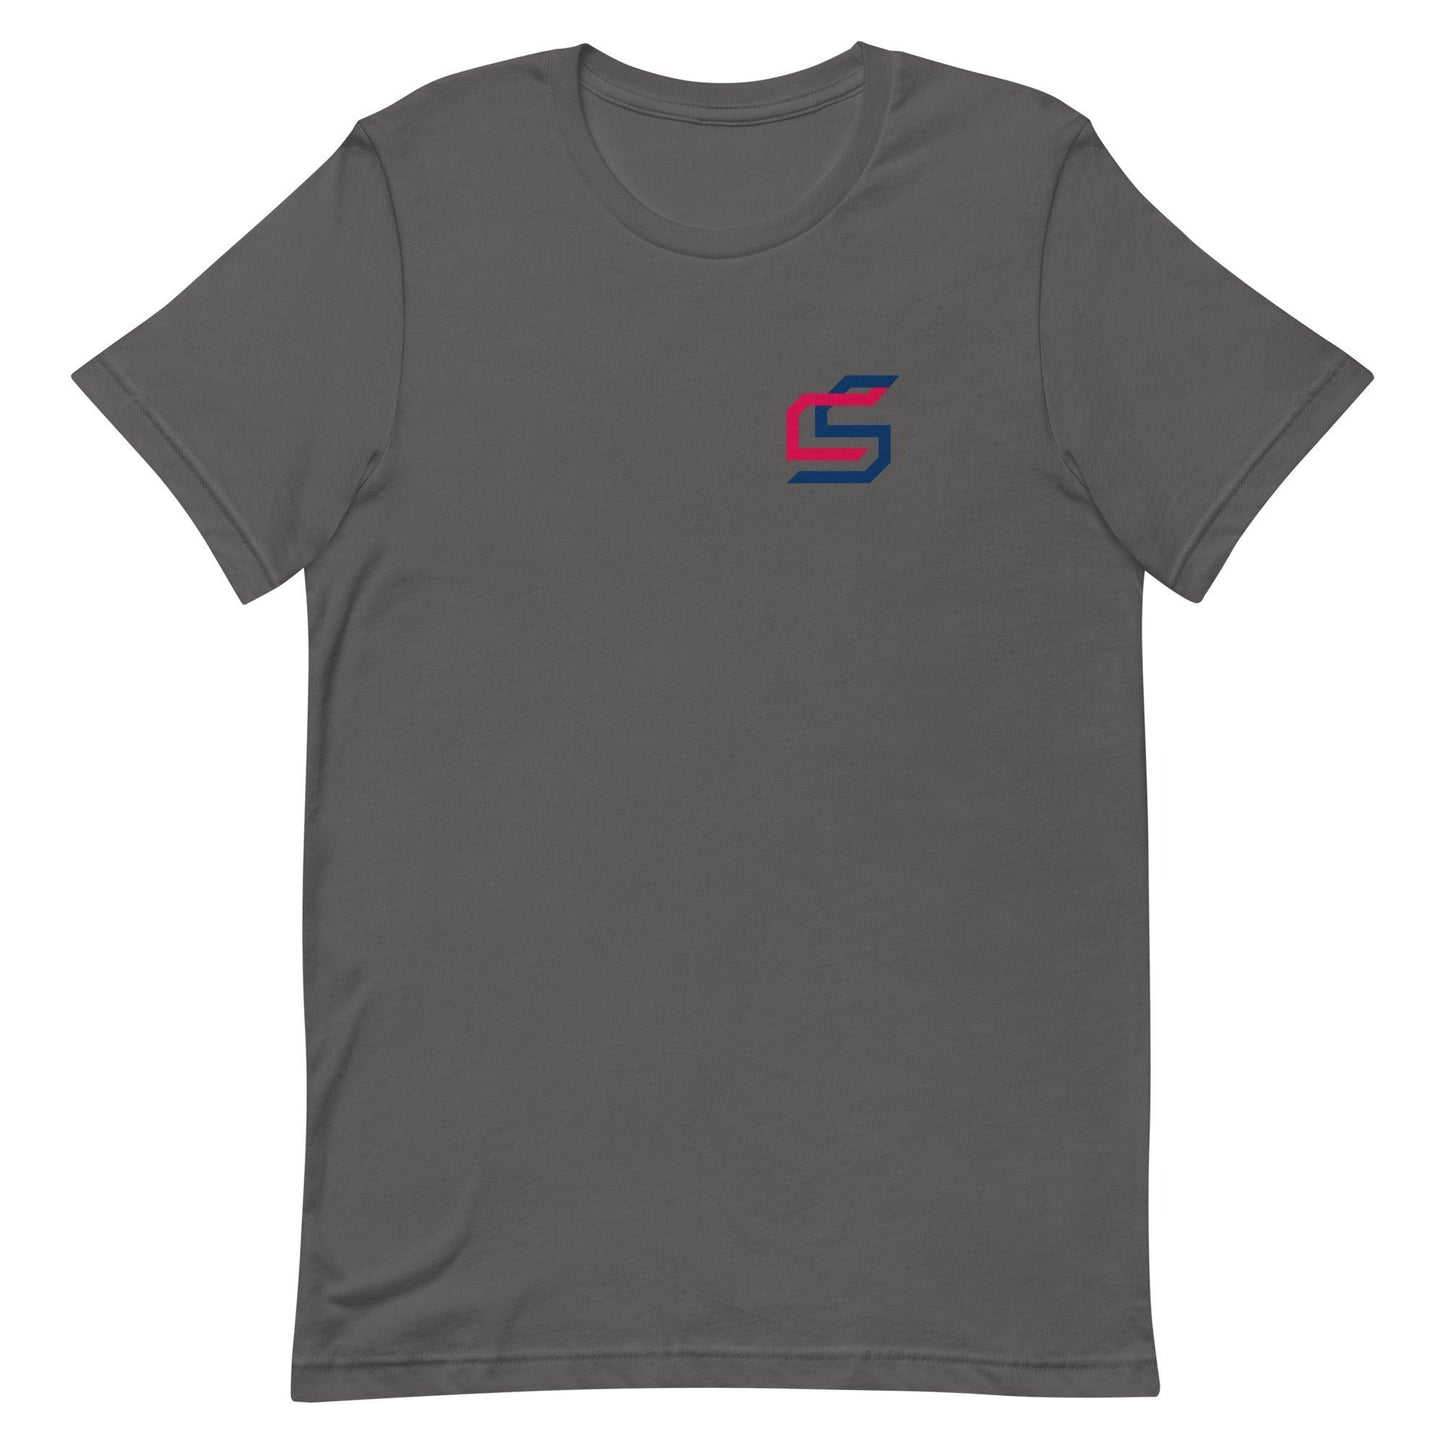 Cortrelle Simpson "Essential" t-shirt - Fan Arch